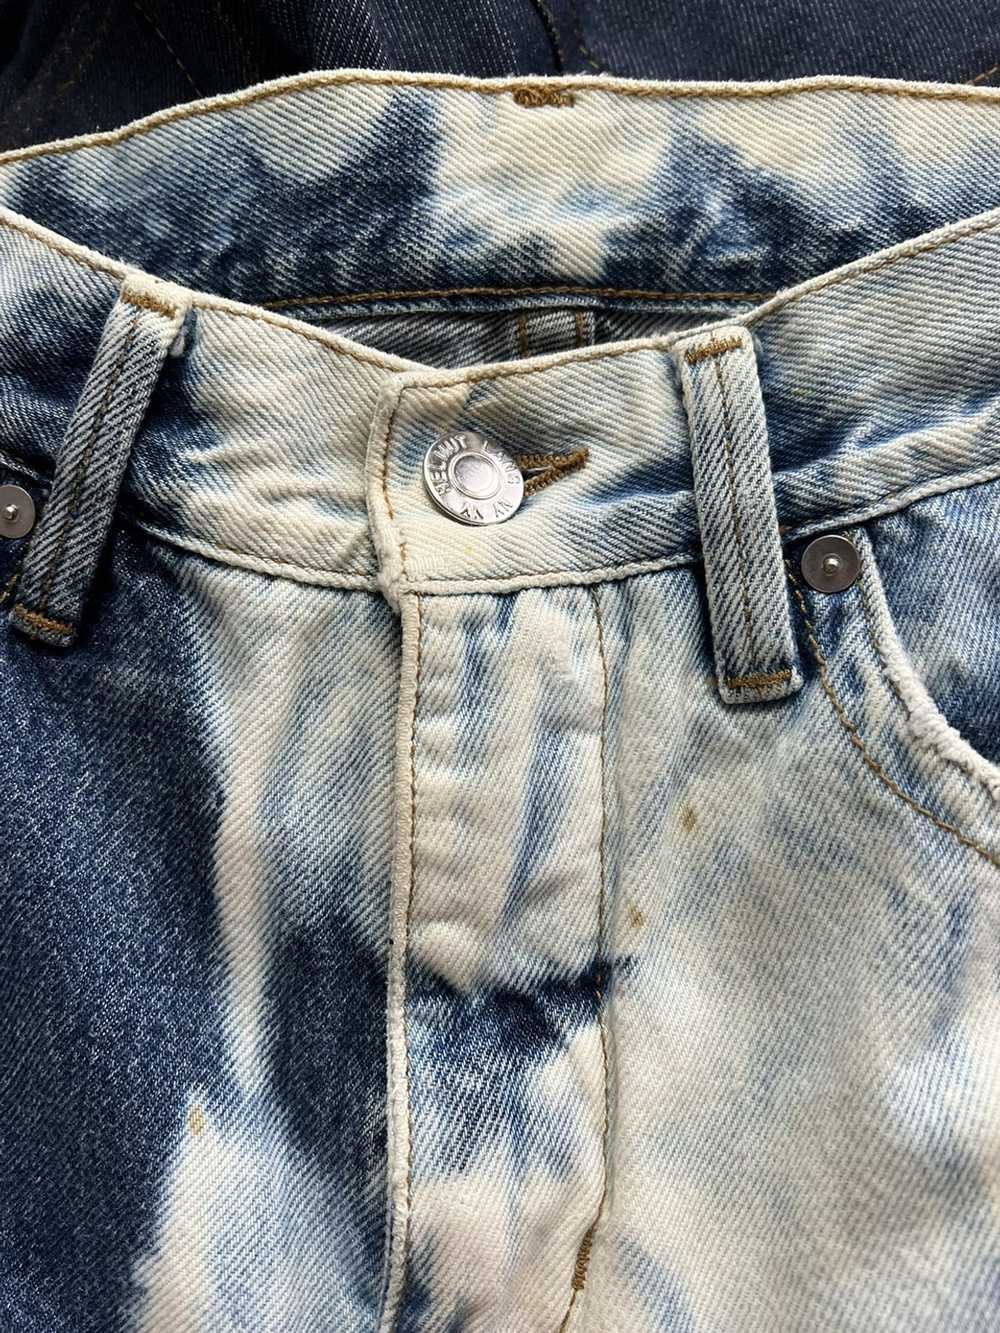 Helmut Lang Indigo Blues jeans - image 5